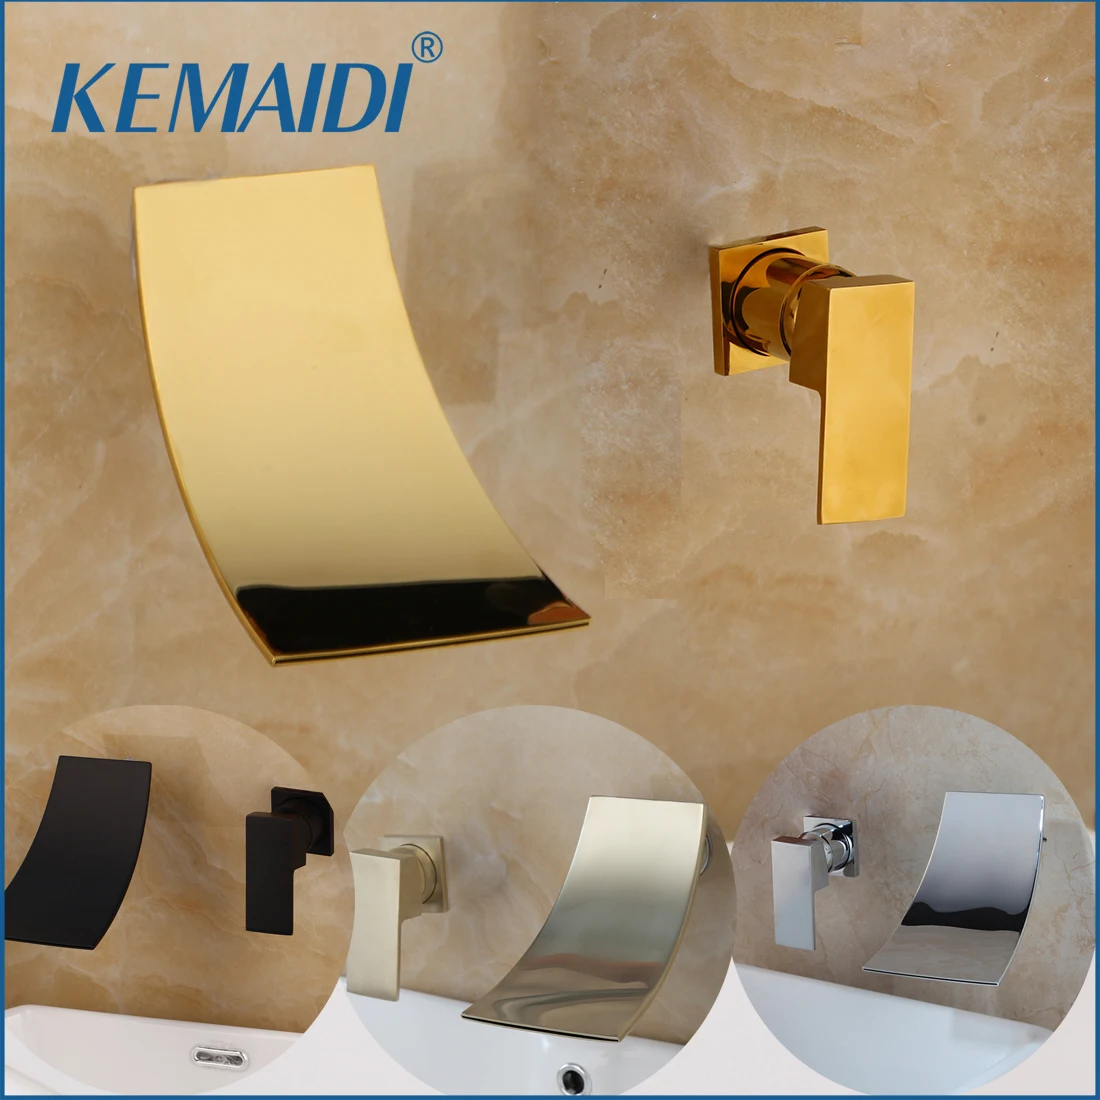 

KEMAIDI Brushed Gold Waterfall Bathroom Sink Faucet Single Lever Bathroom Washing Basin Mixer Tap Widespread Lavatory Crane